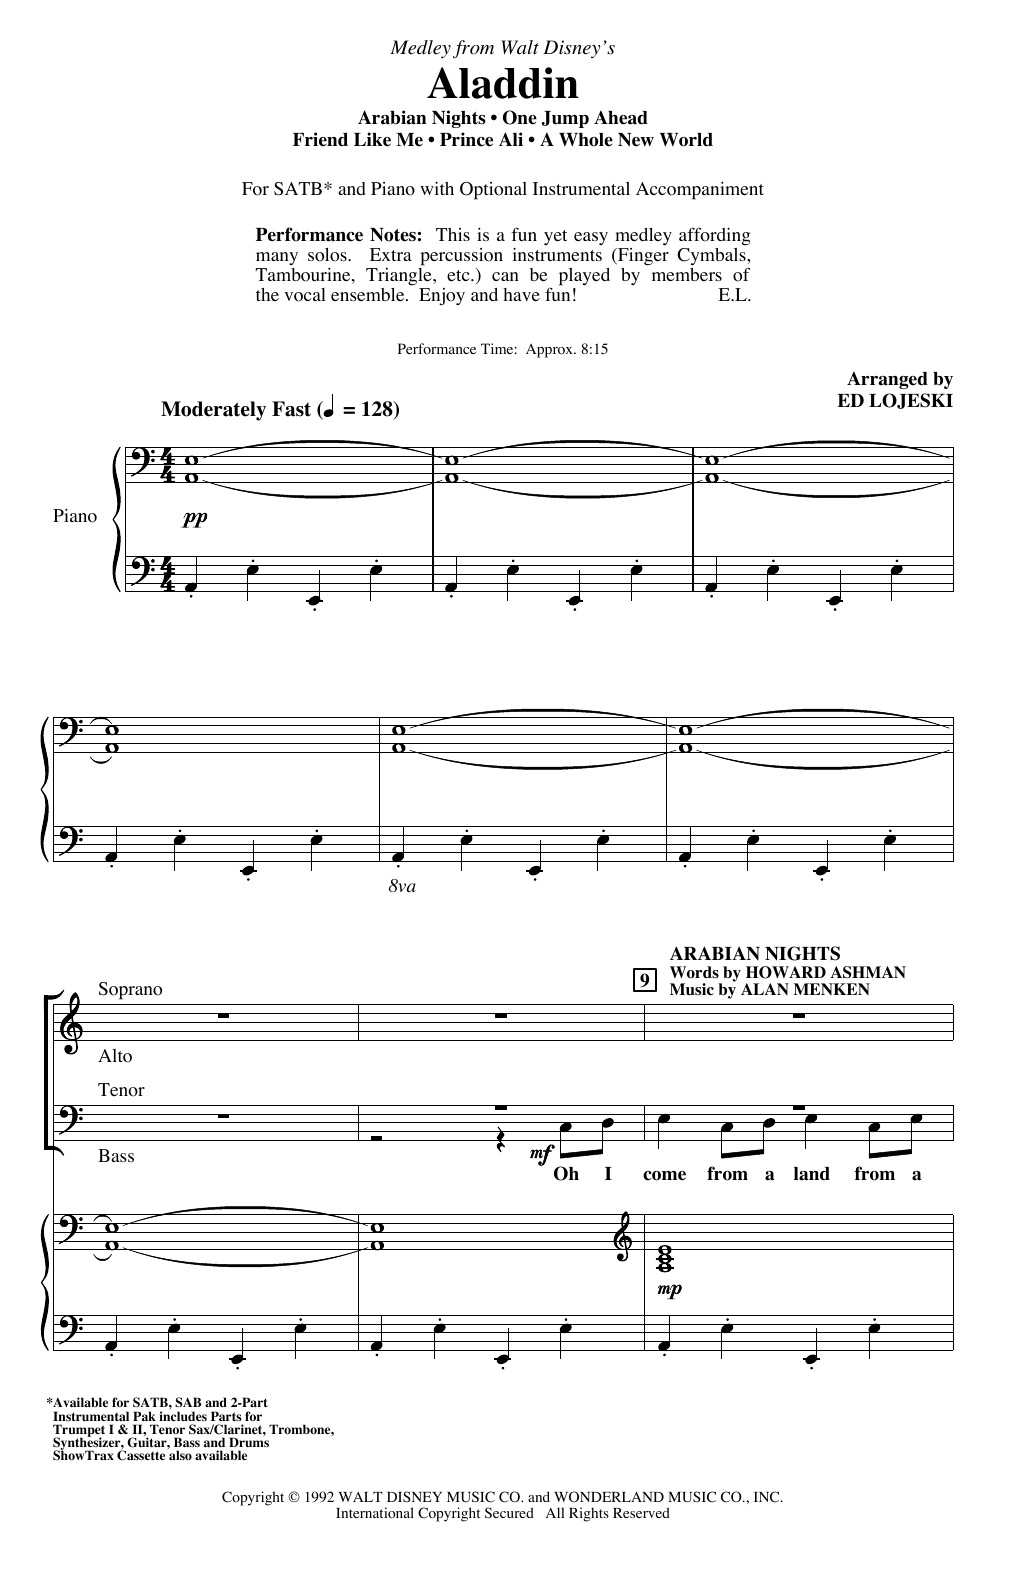 Alan Menken Aladdin (Medley) (from Disney's Aladdin) (arr. Ed Lojeski) Sheet Music Notes & Chords for SAB Choir - Download or Print PDF